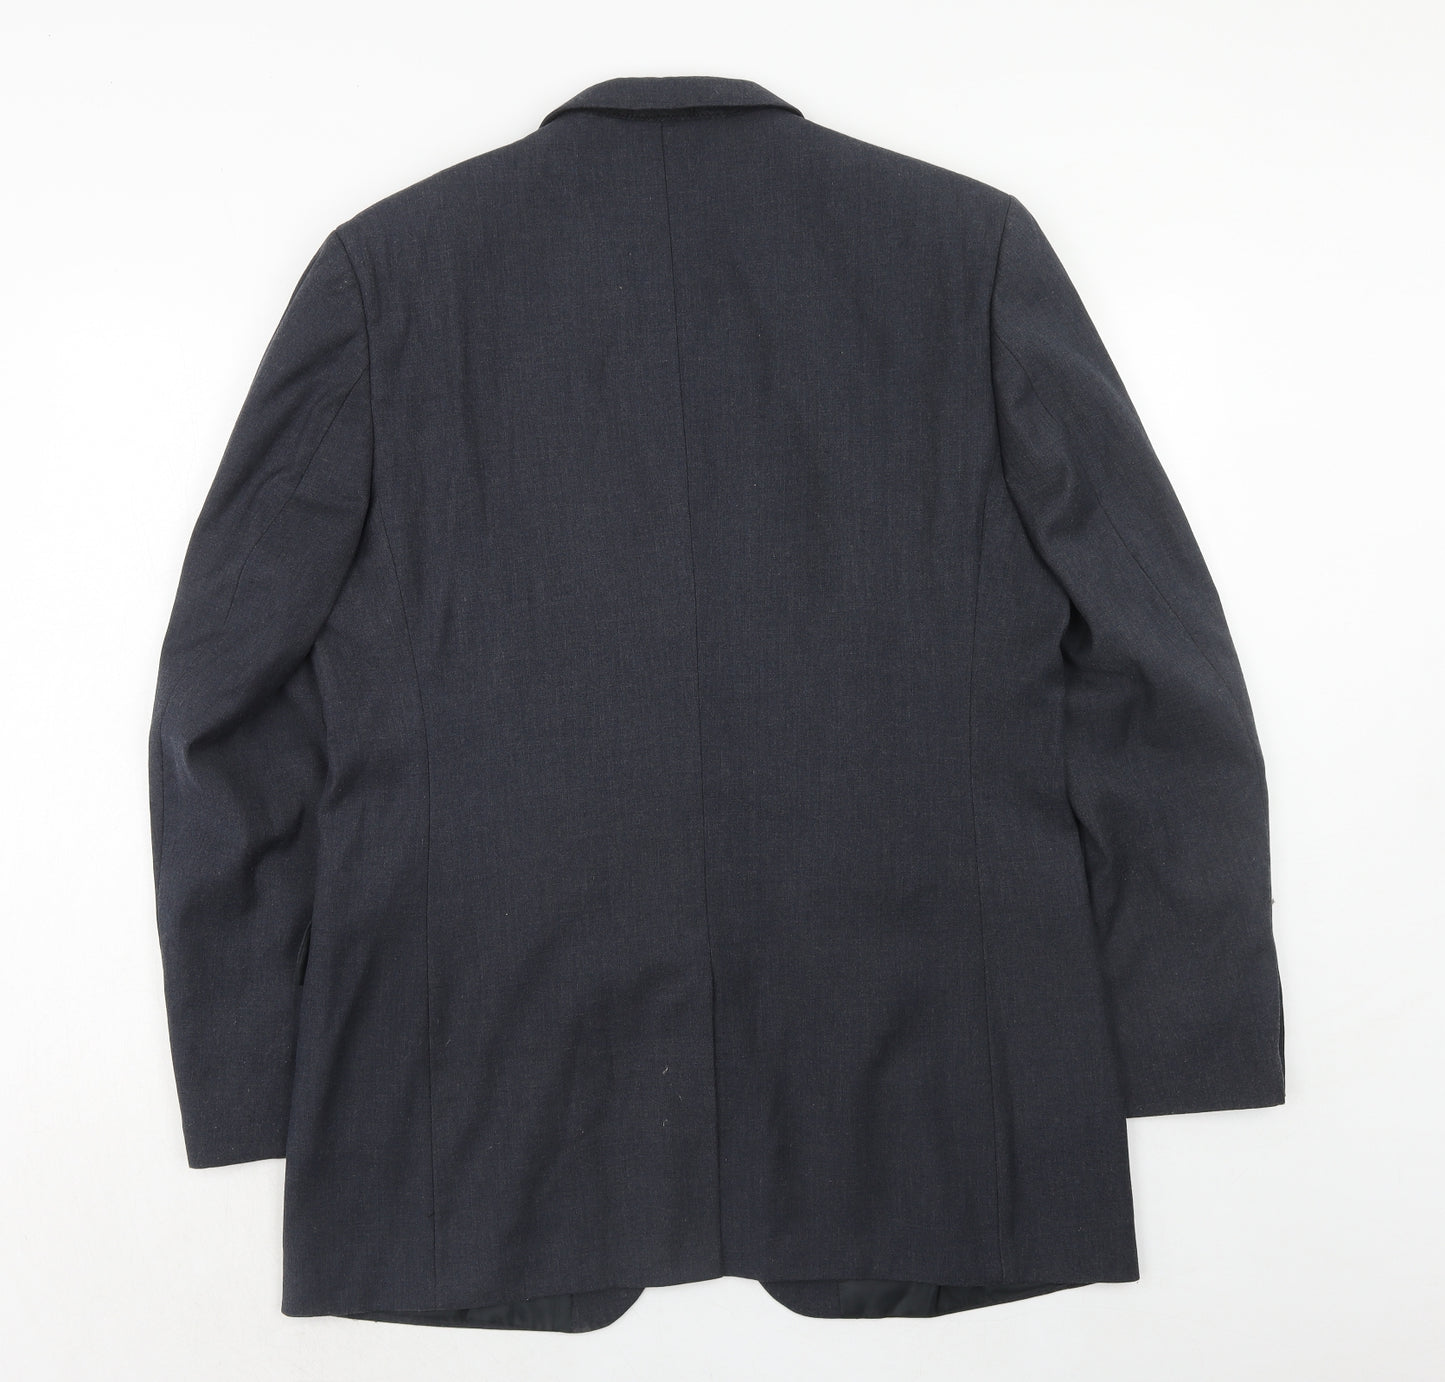 Burton Mens Blue Polyester Jacket Suit Jacket Size 42 Regular